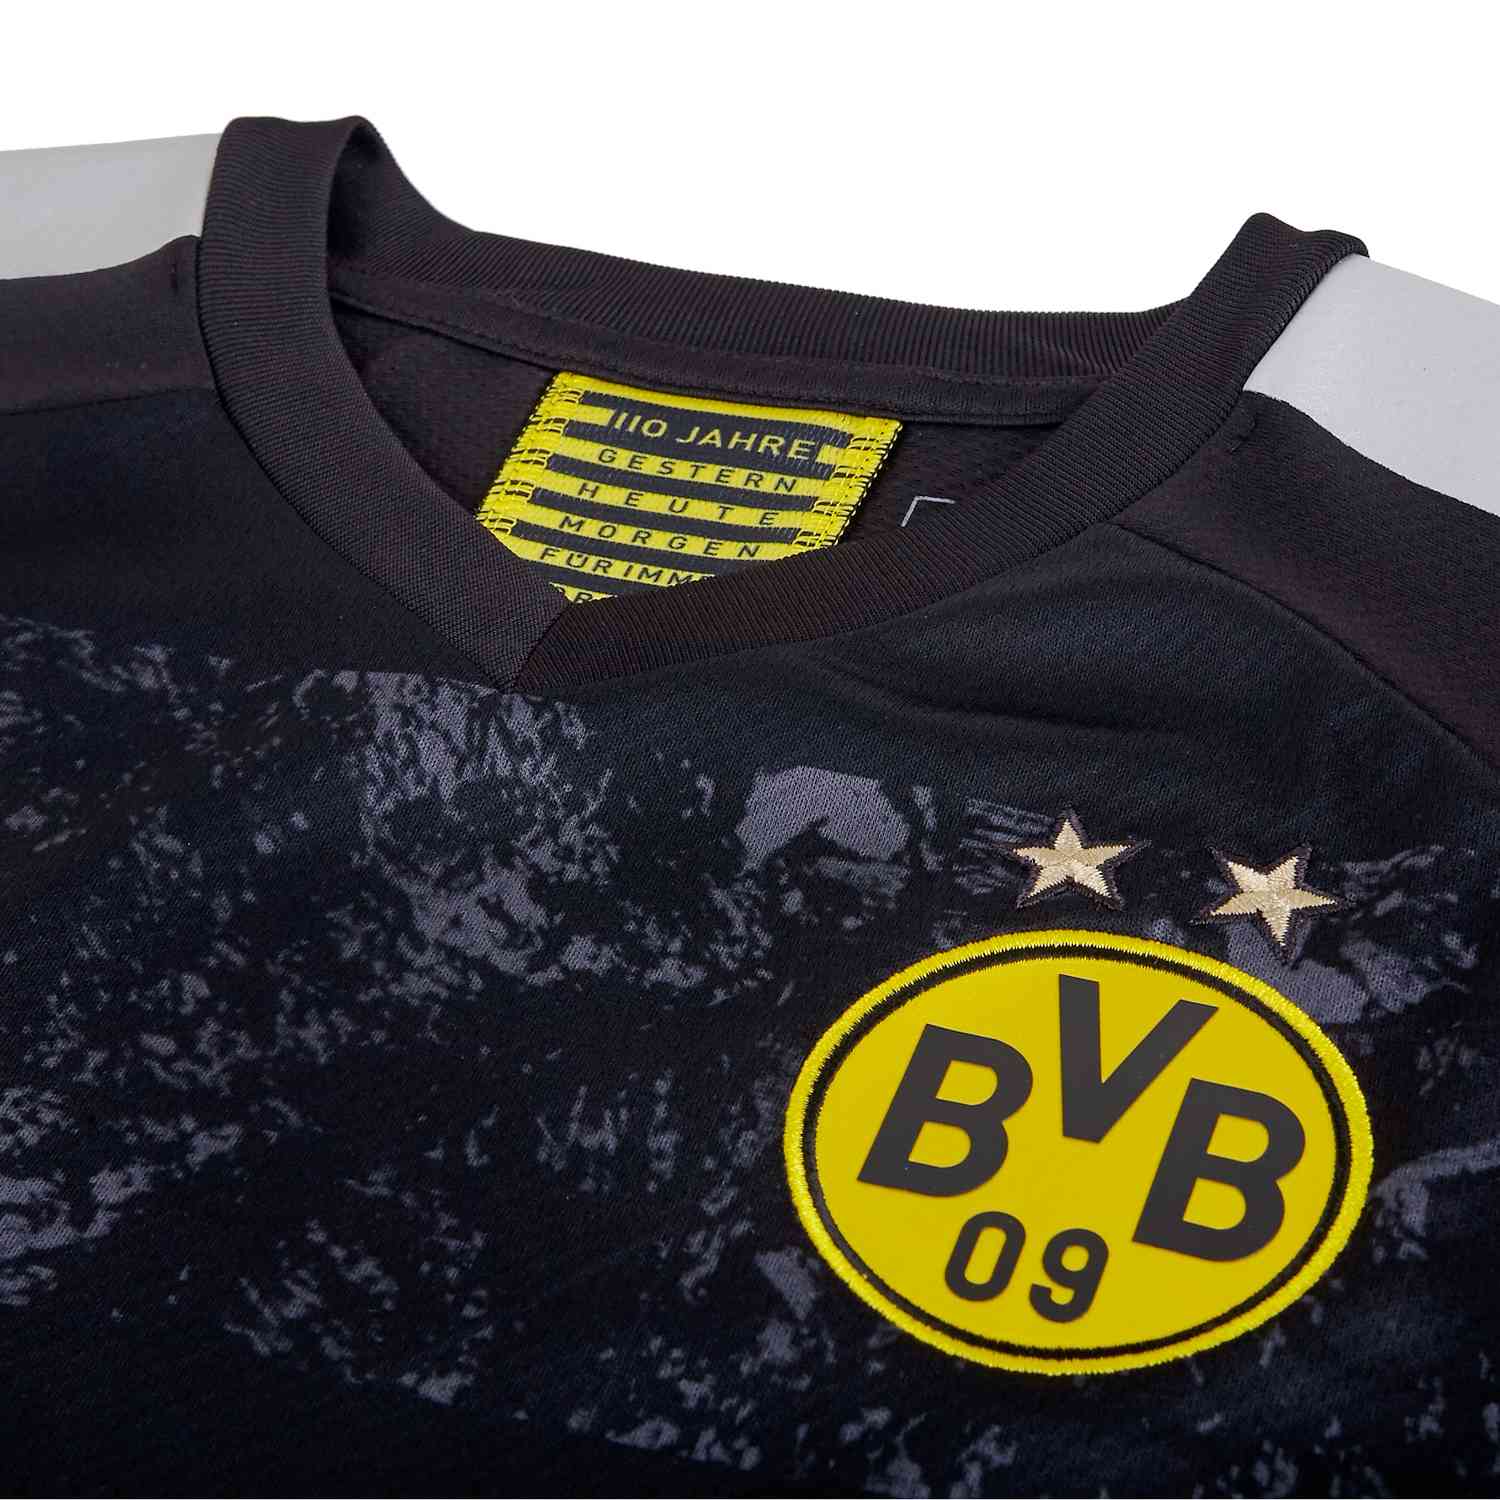 PUMA Launch Borussia Dortmund 2019/20 Away Shirt - SoccerBible